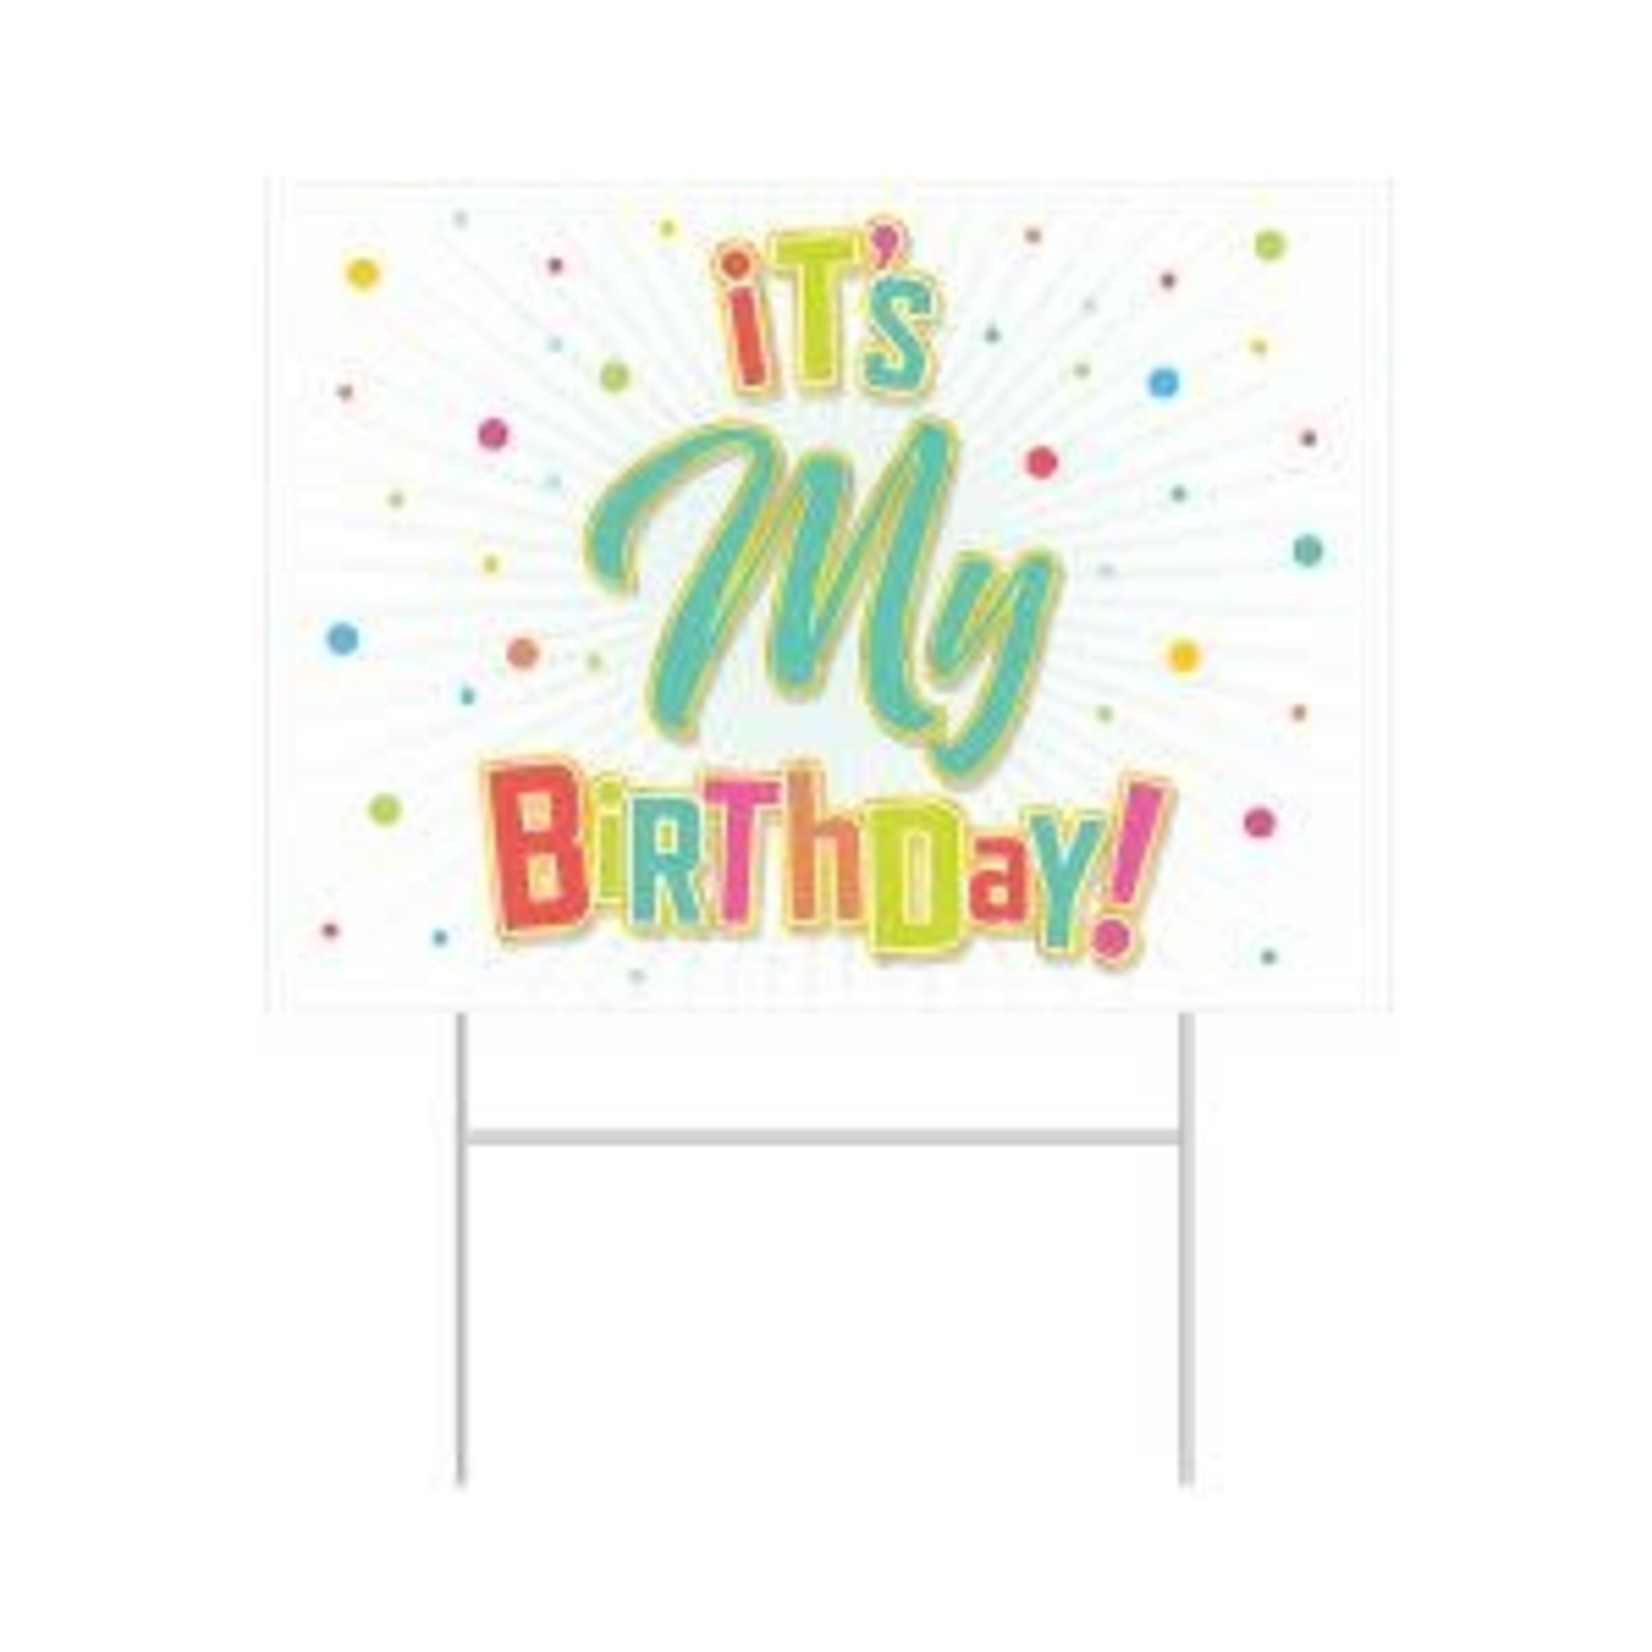 Beistle It's My Birthday! Plastic Lawn Sign - 1ct. (11.5" x 15.5")